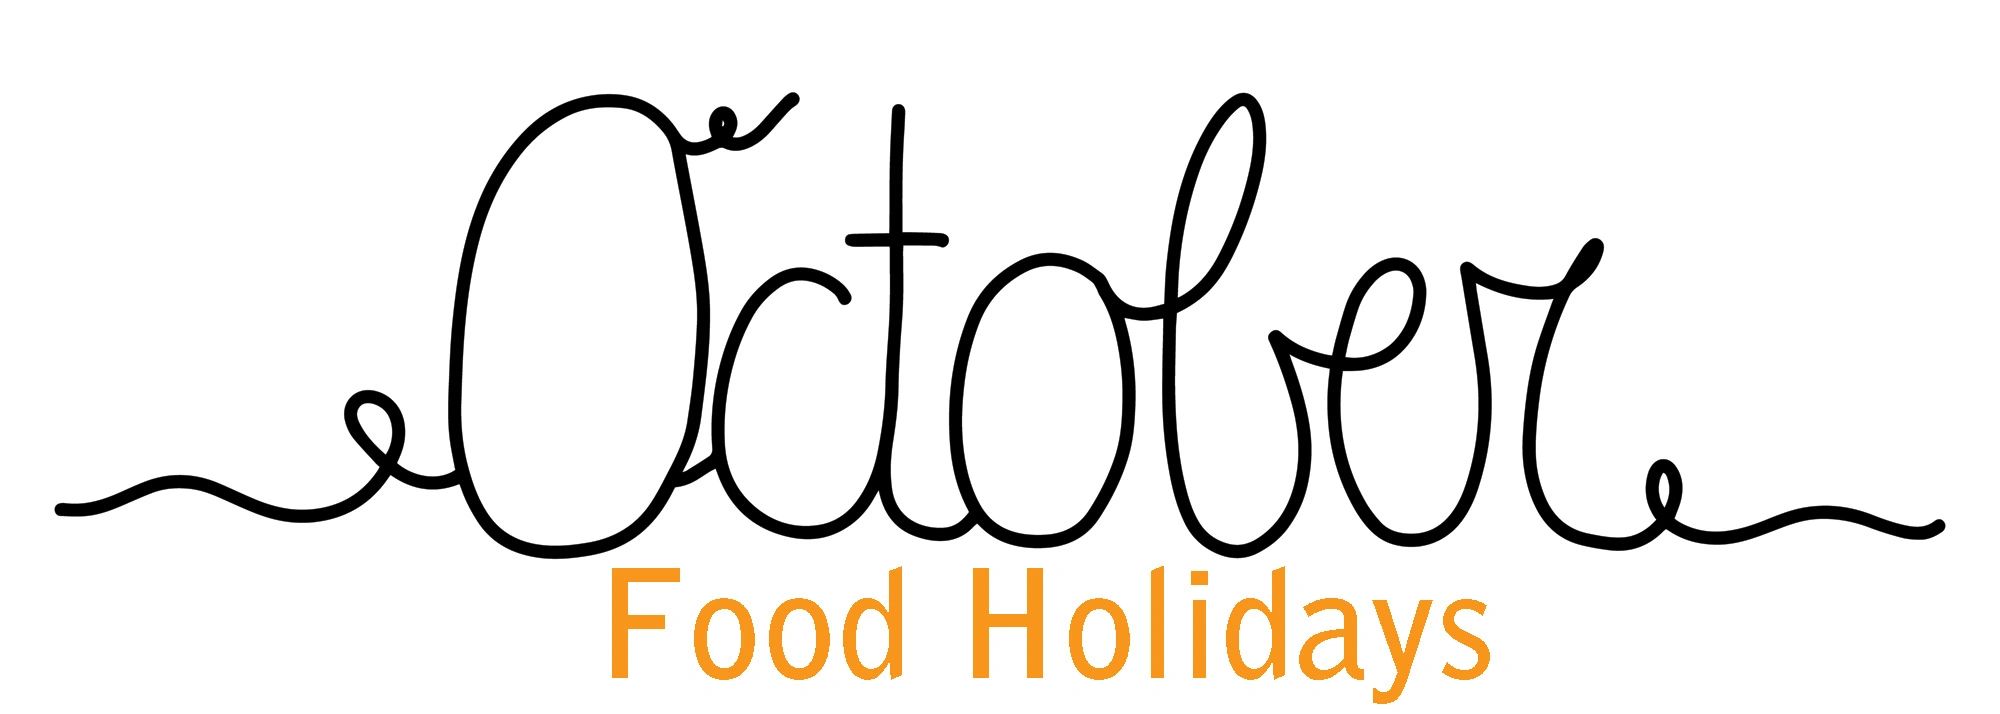 October Food Holidays logo